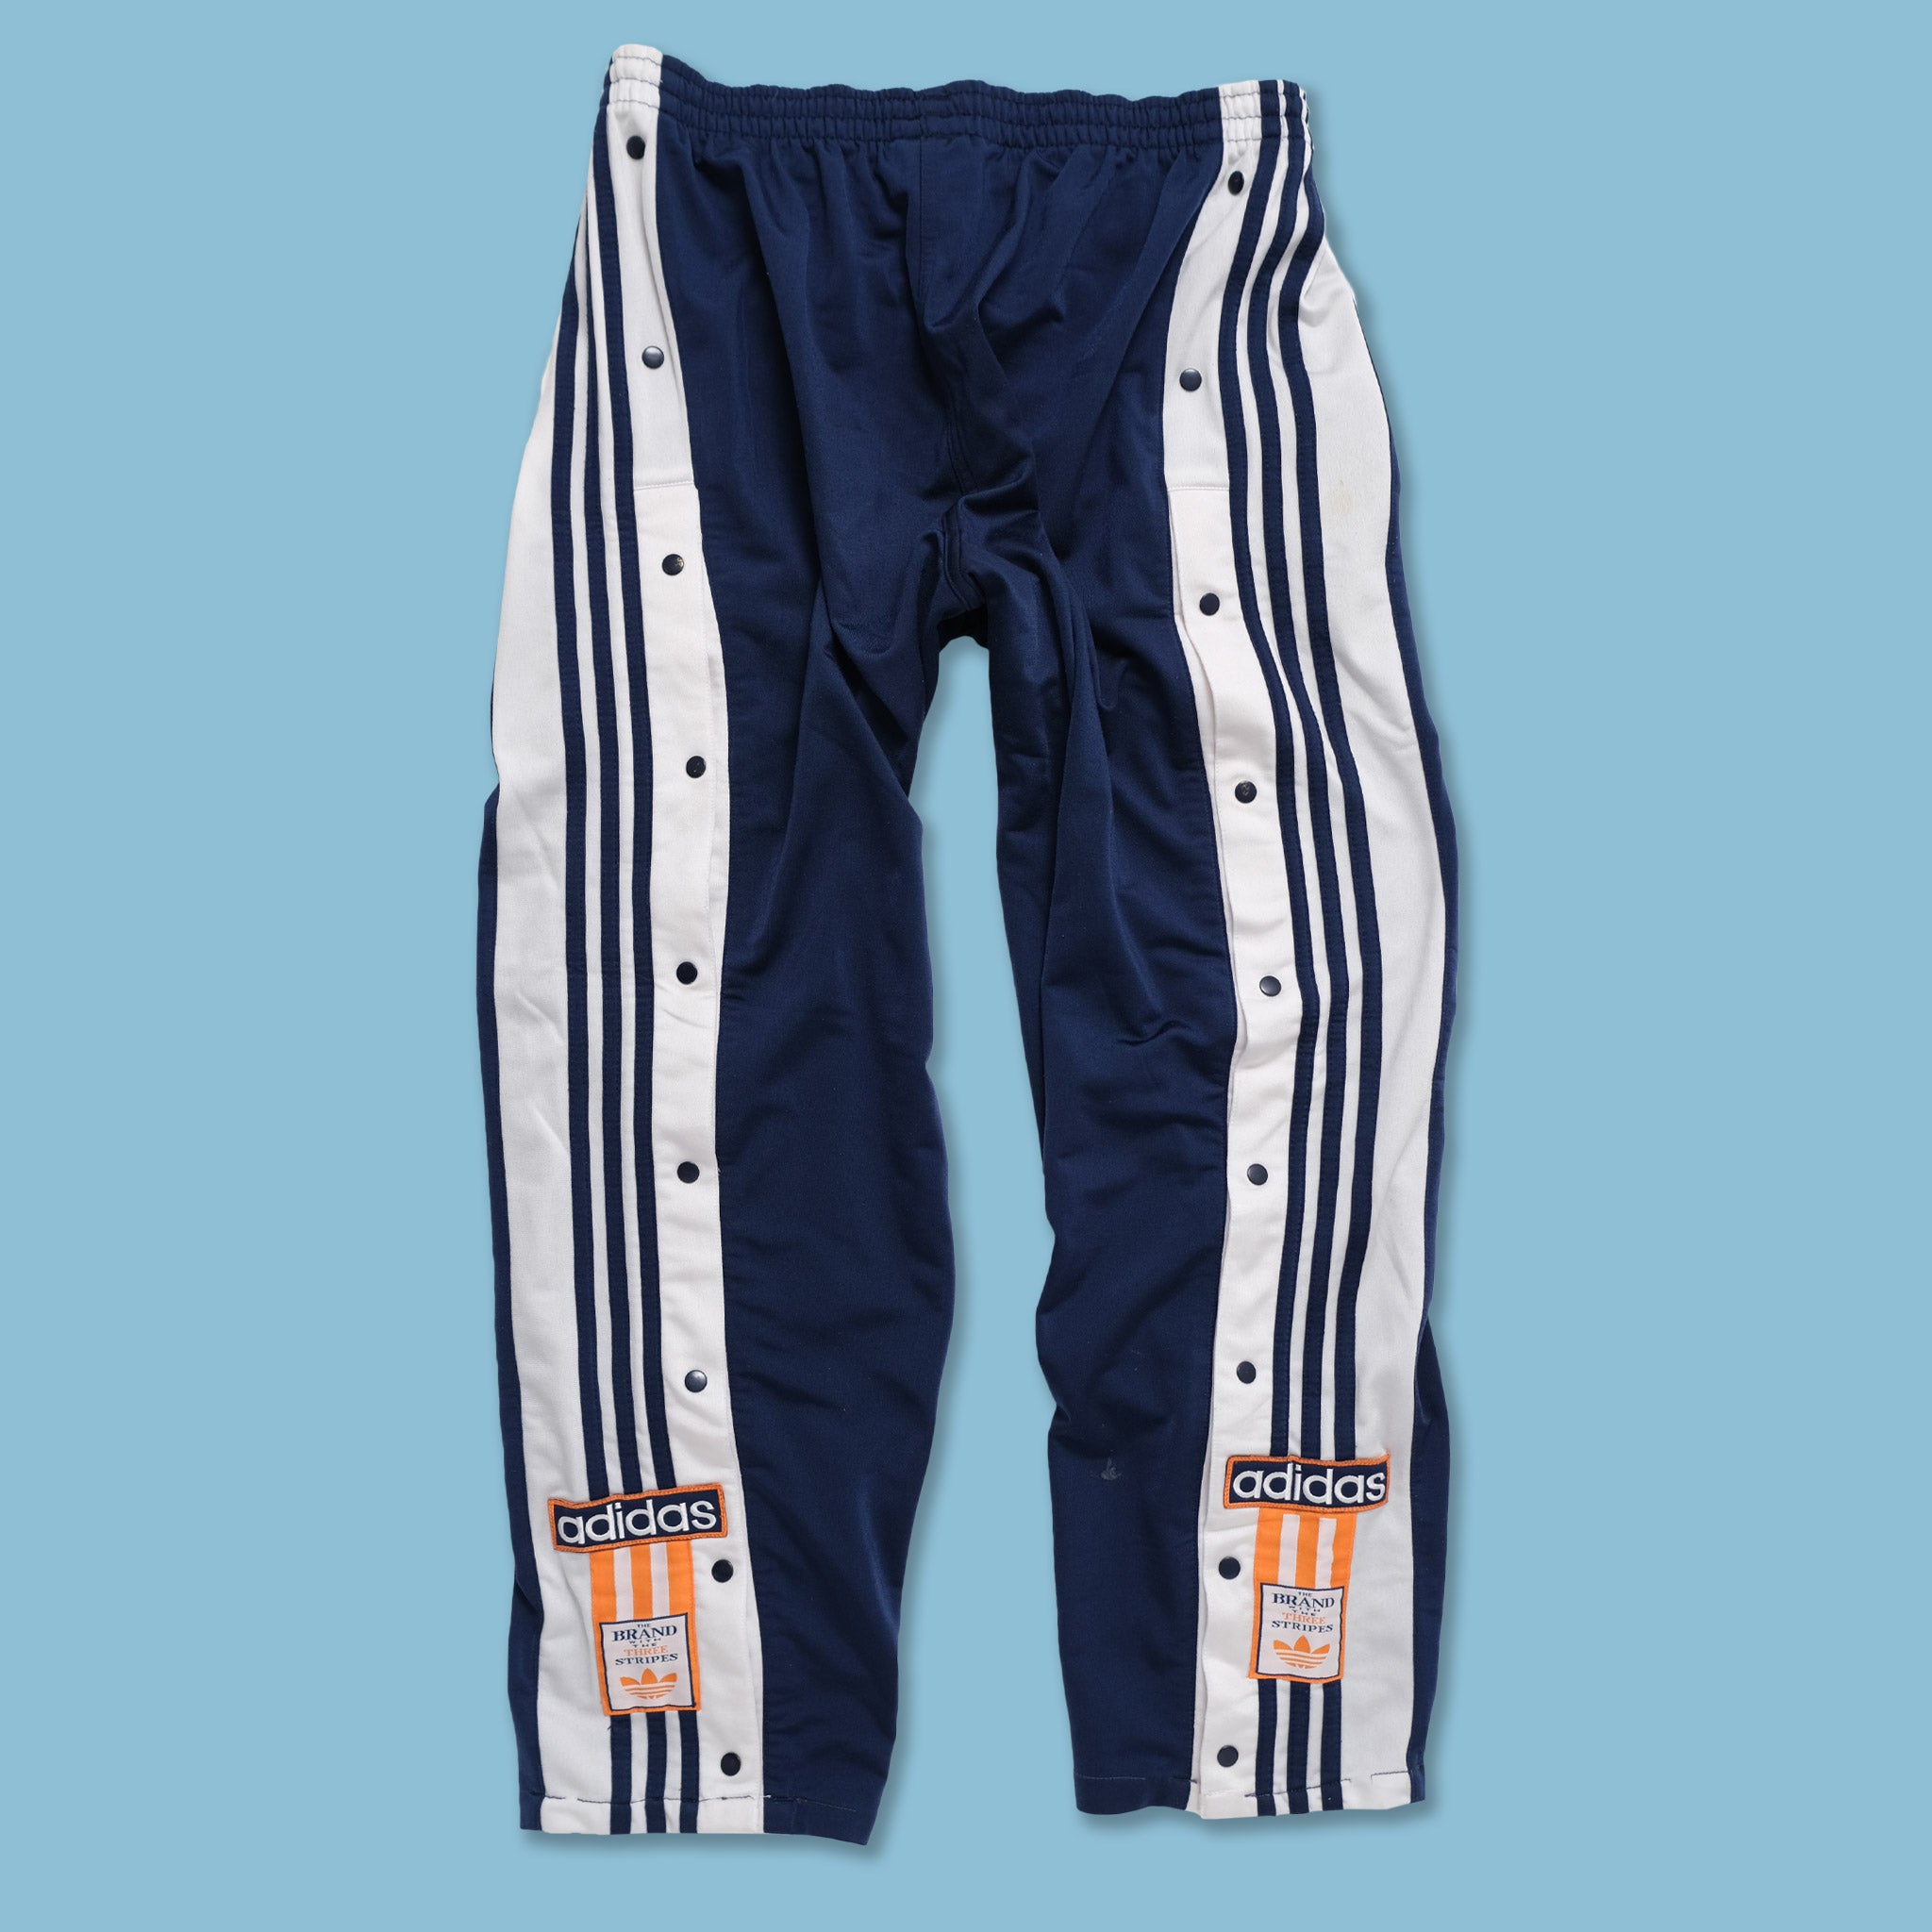 adidas | Pants | Adidas Classic 3stripes Track Pants | Poshmark